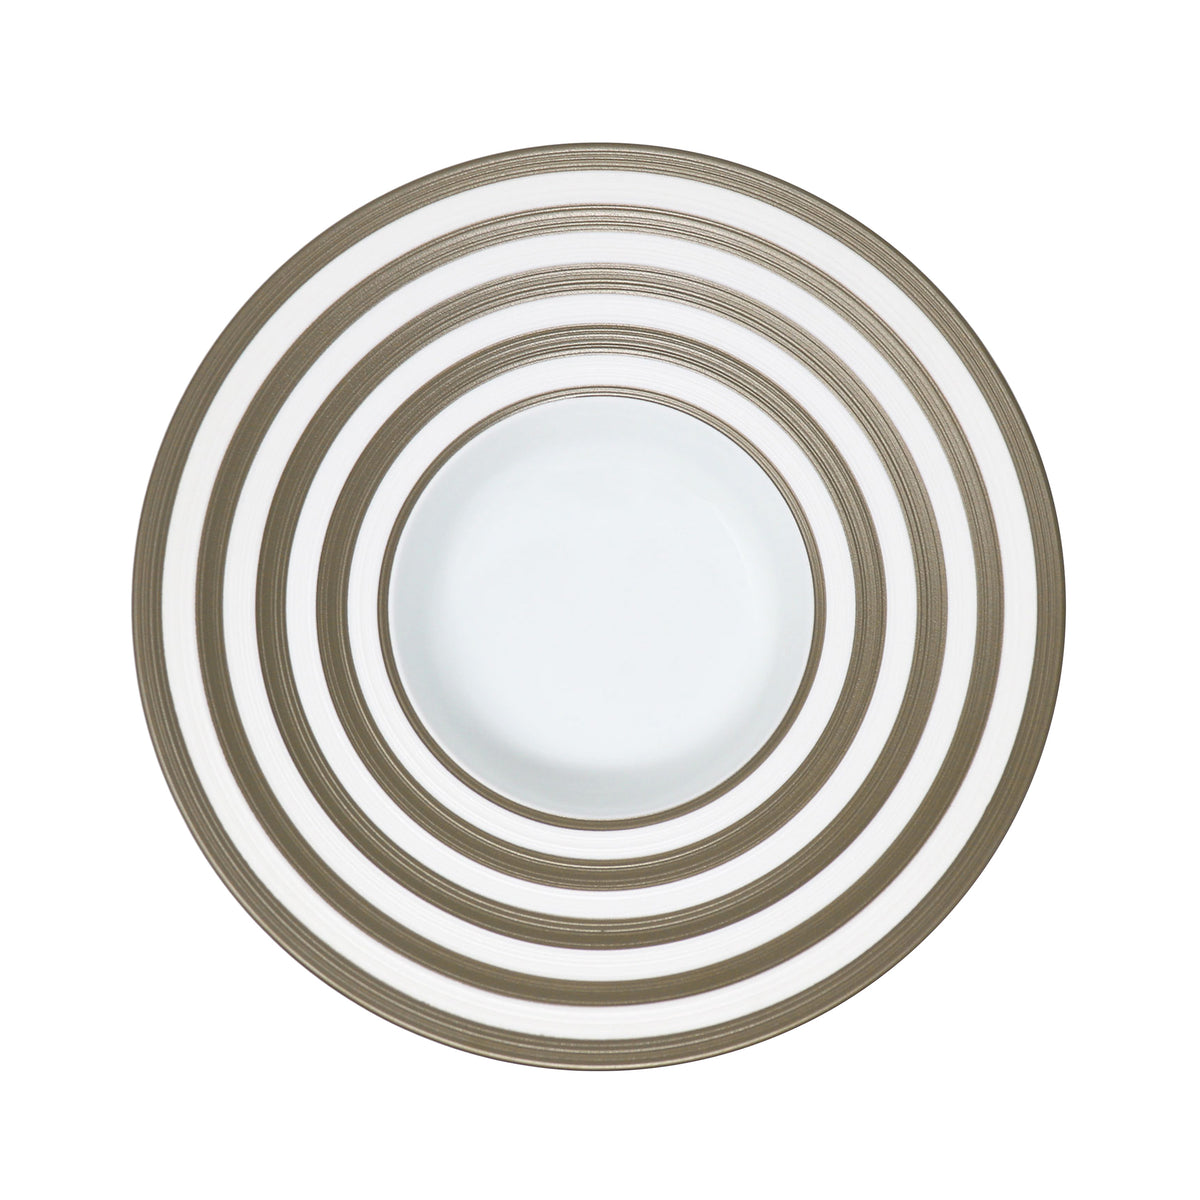 HEMISPHERE Striped Grey Metallic - Rim soup plate, large